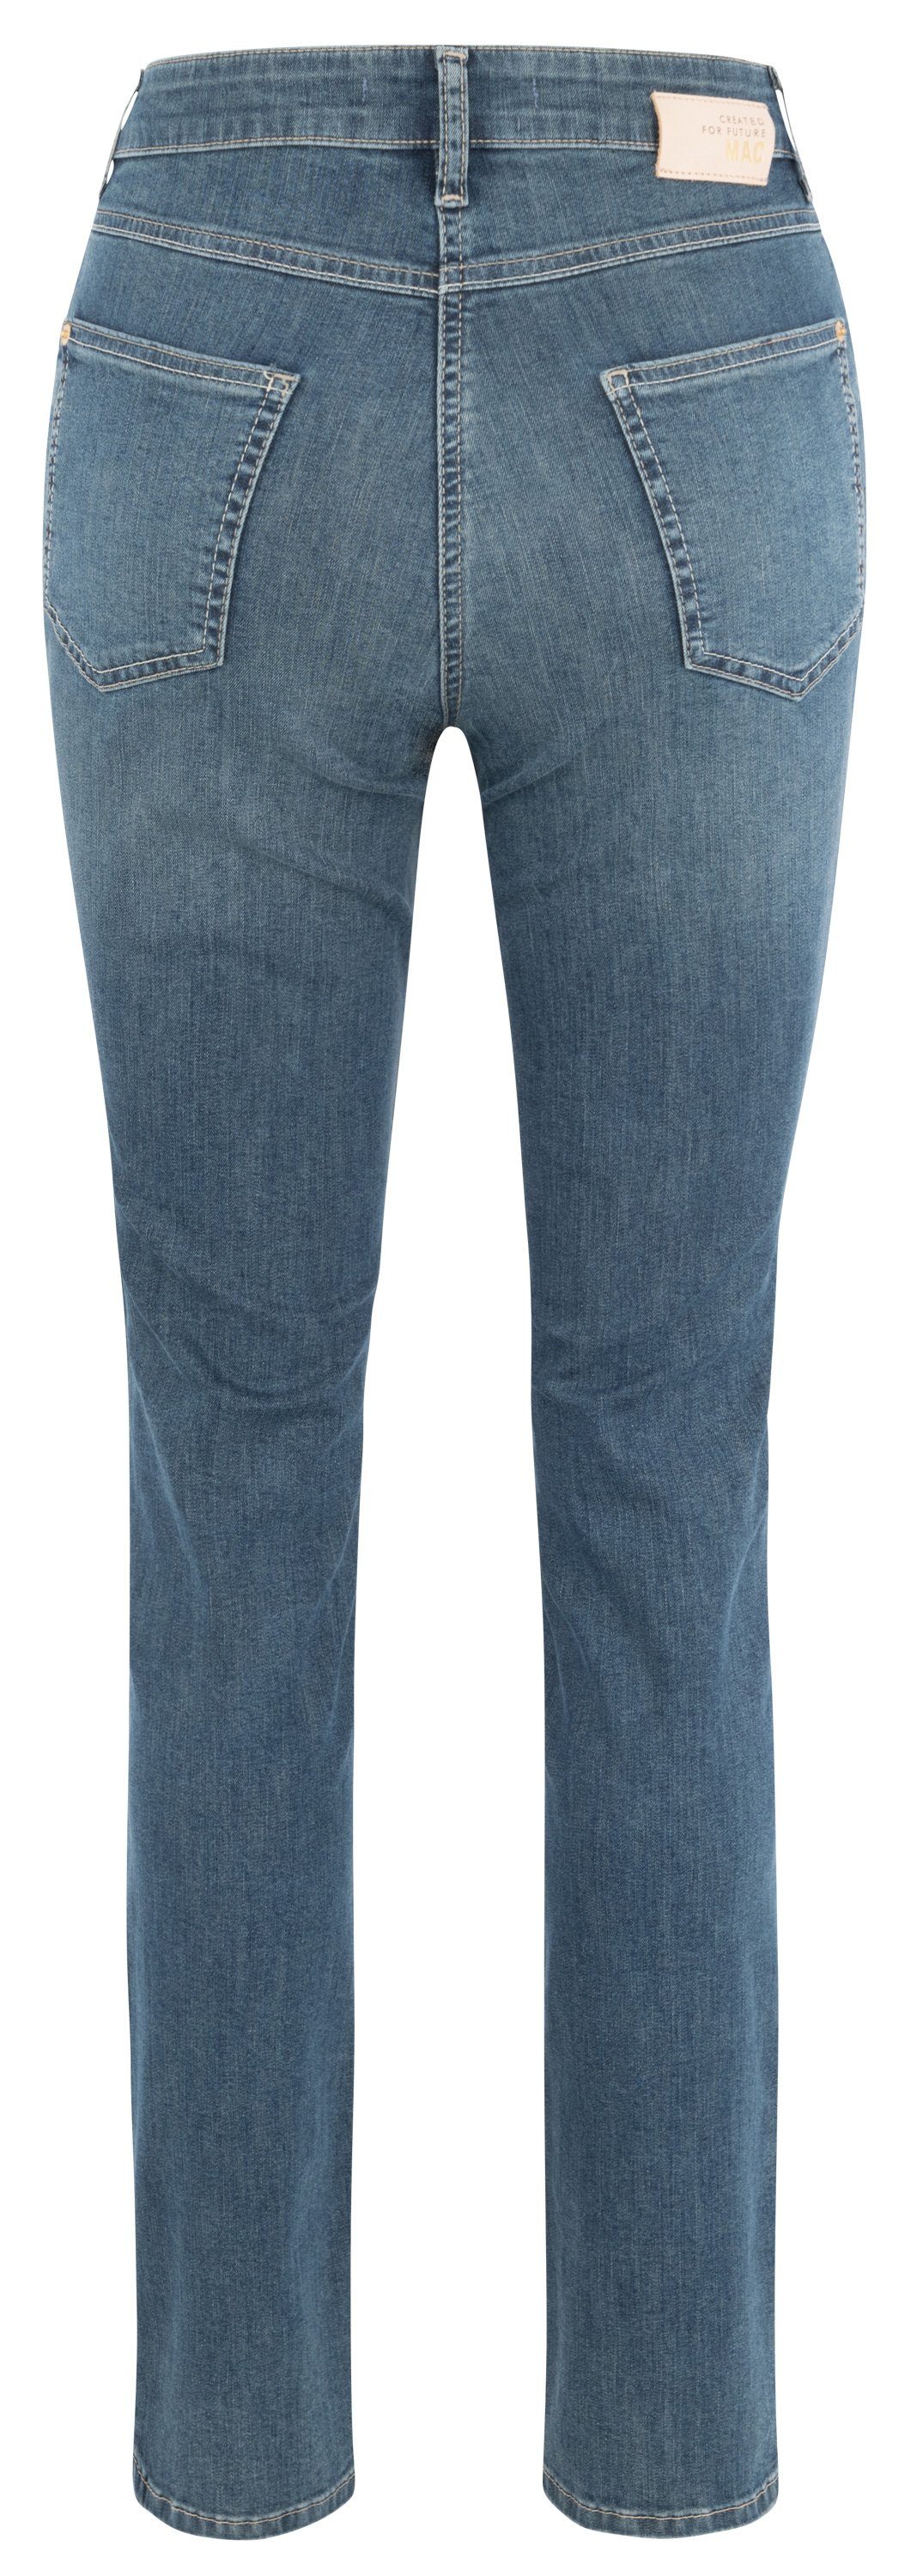 MAC Stretch-Jeans MAC MELANIE vintage 5040-90-0380 D823 wash